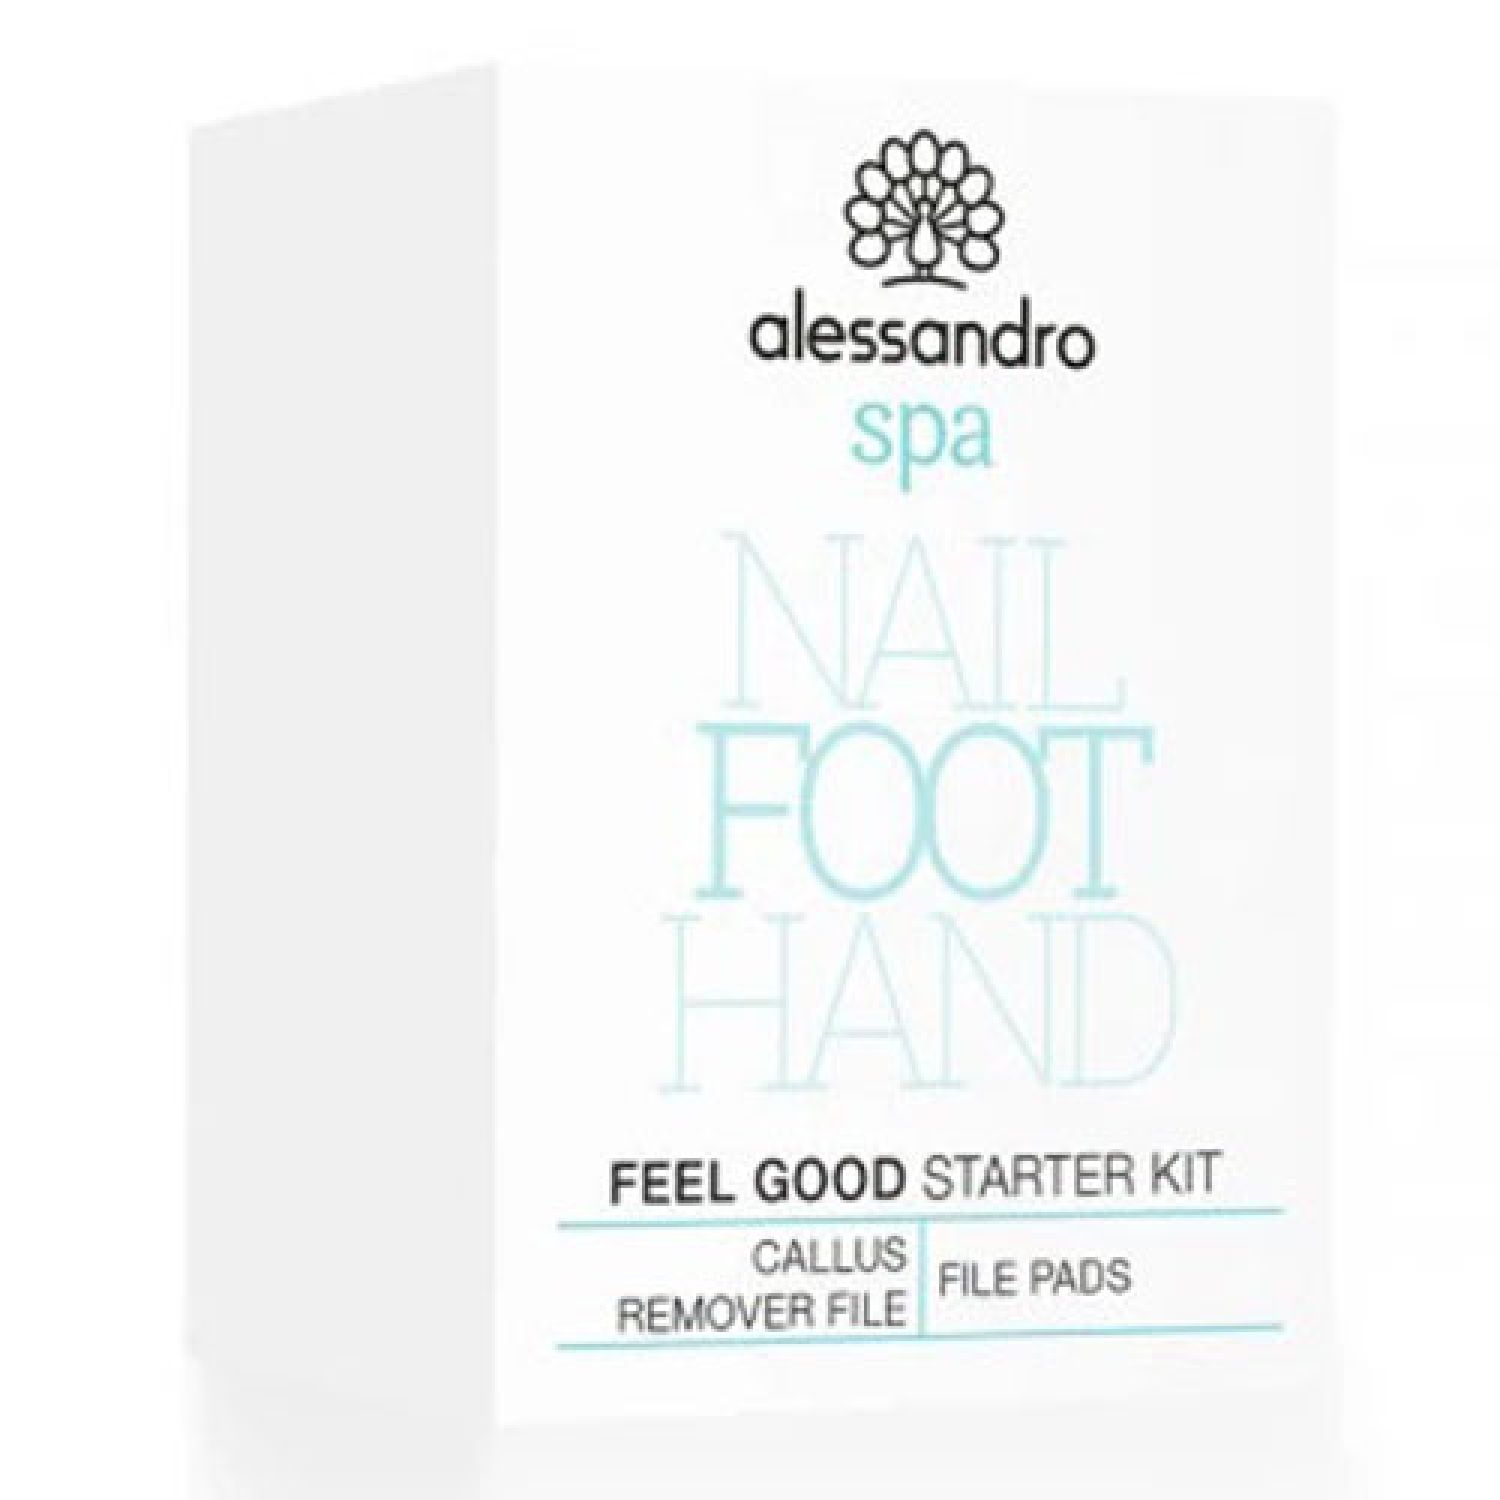 Alessandro International spa FOOT feel good starter kit